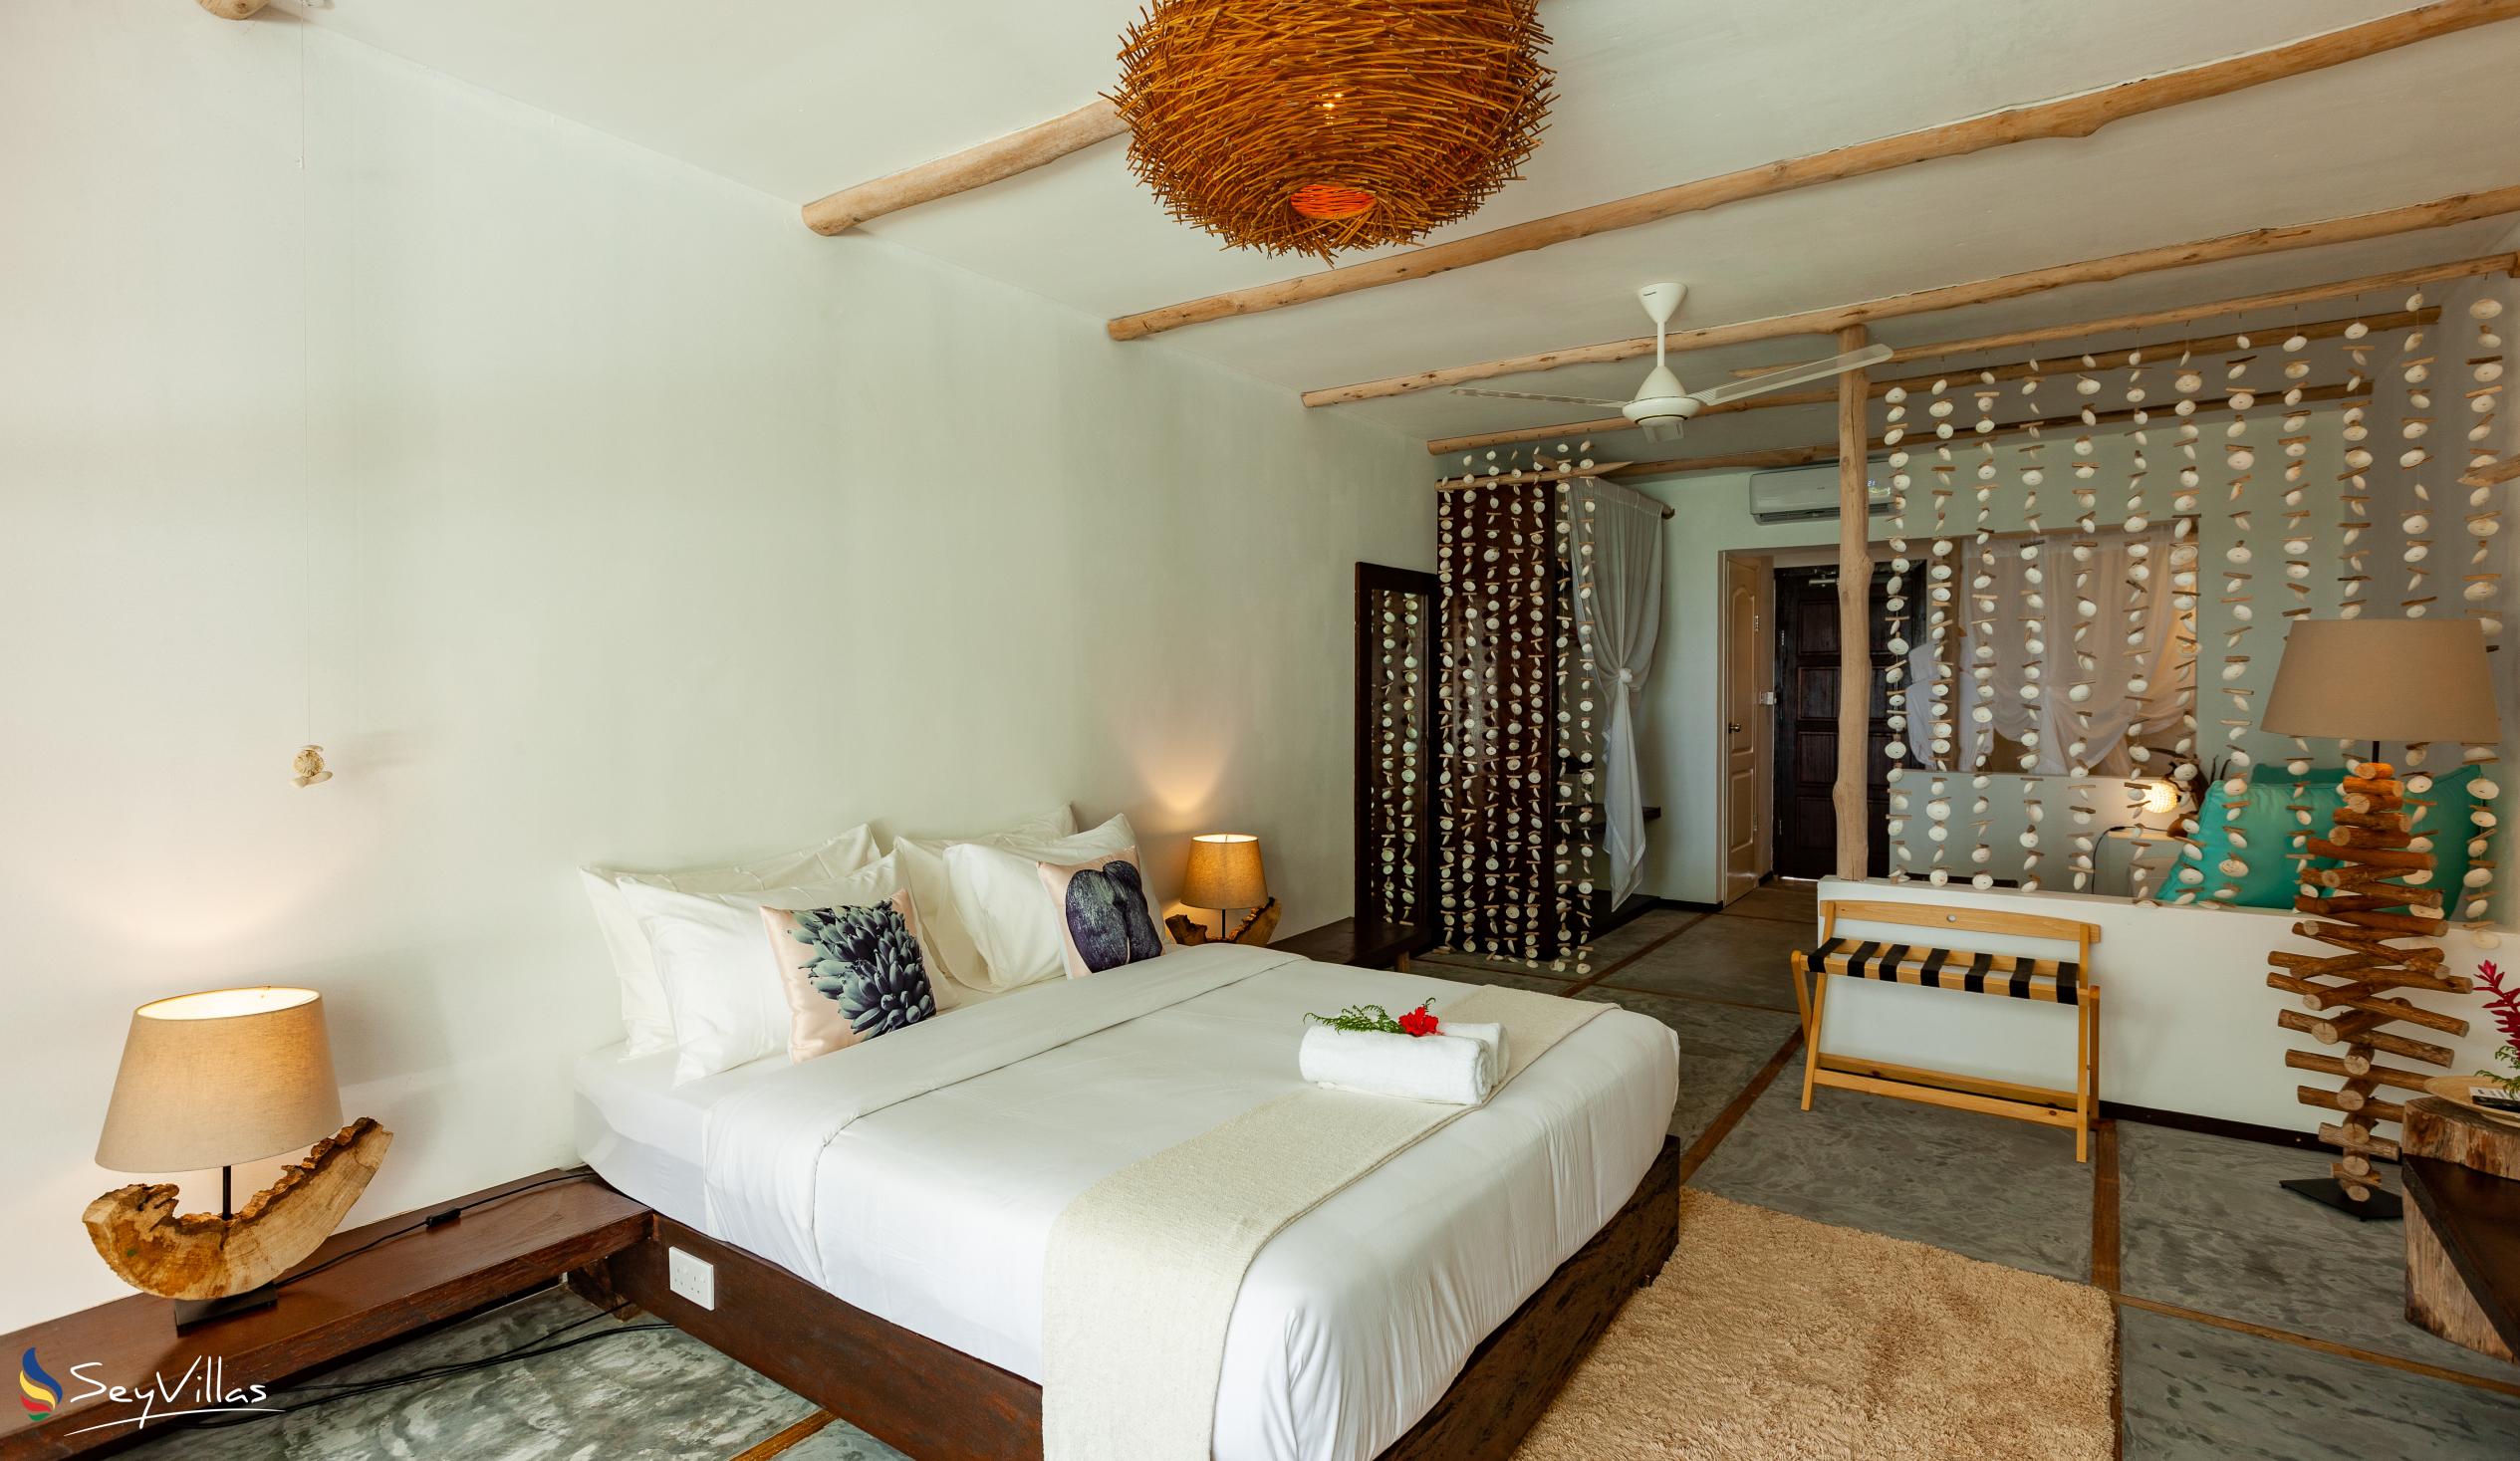 Photo 113: Bliss Hotel Praslin - Beach House - Beach Deluxe Room - Praslin (Seychelles)